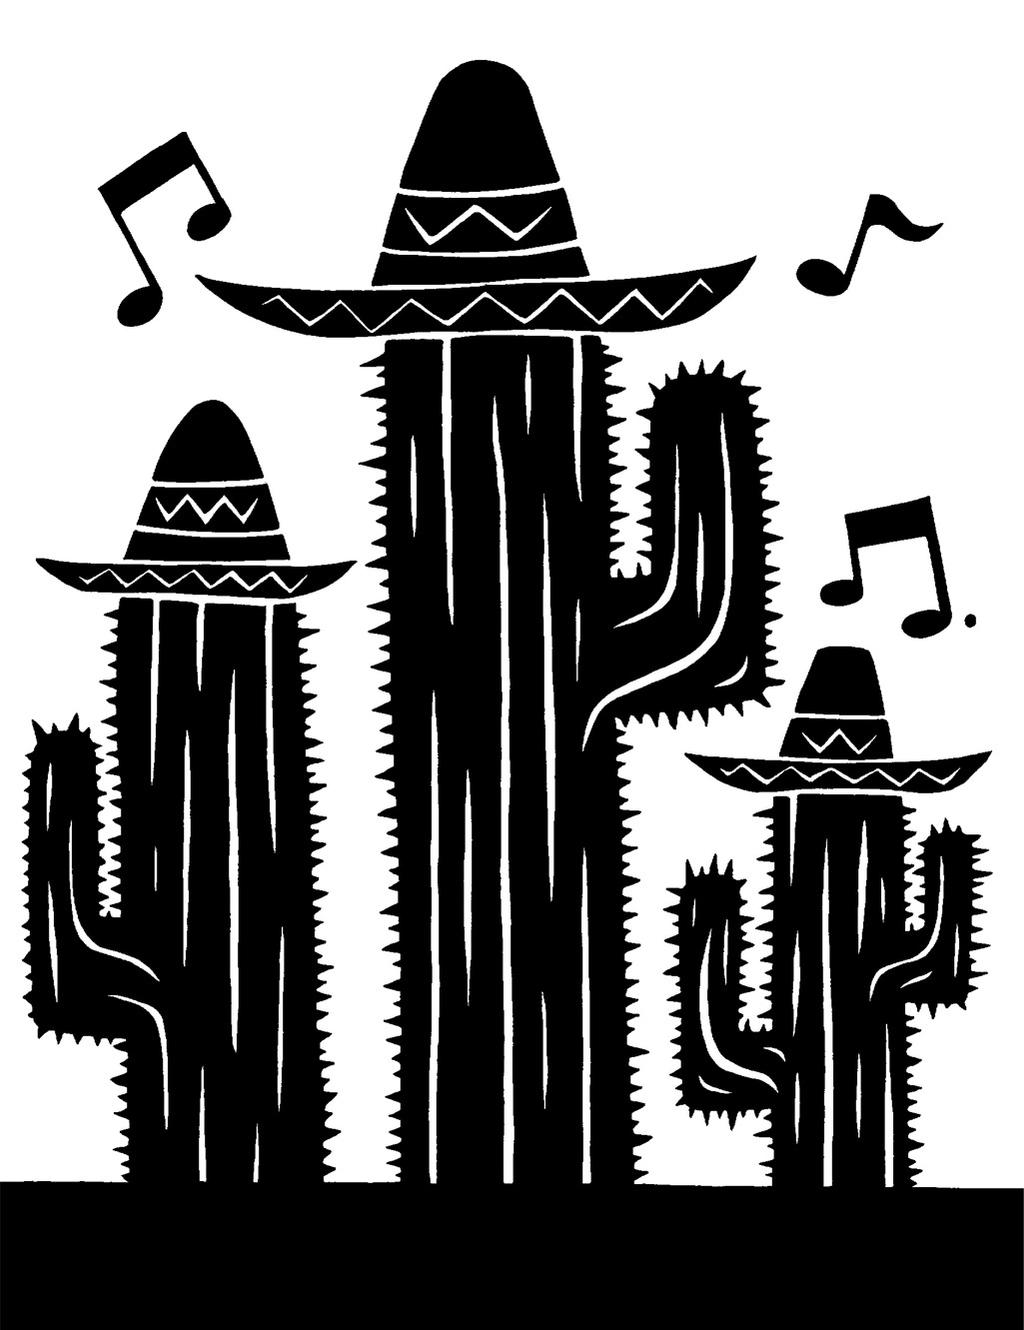 SCP-065-J - Singing Cacti Amigos